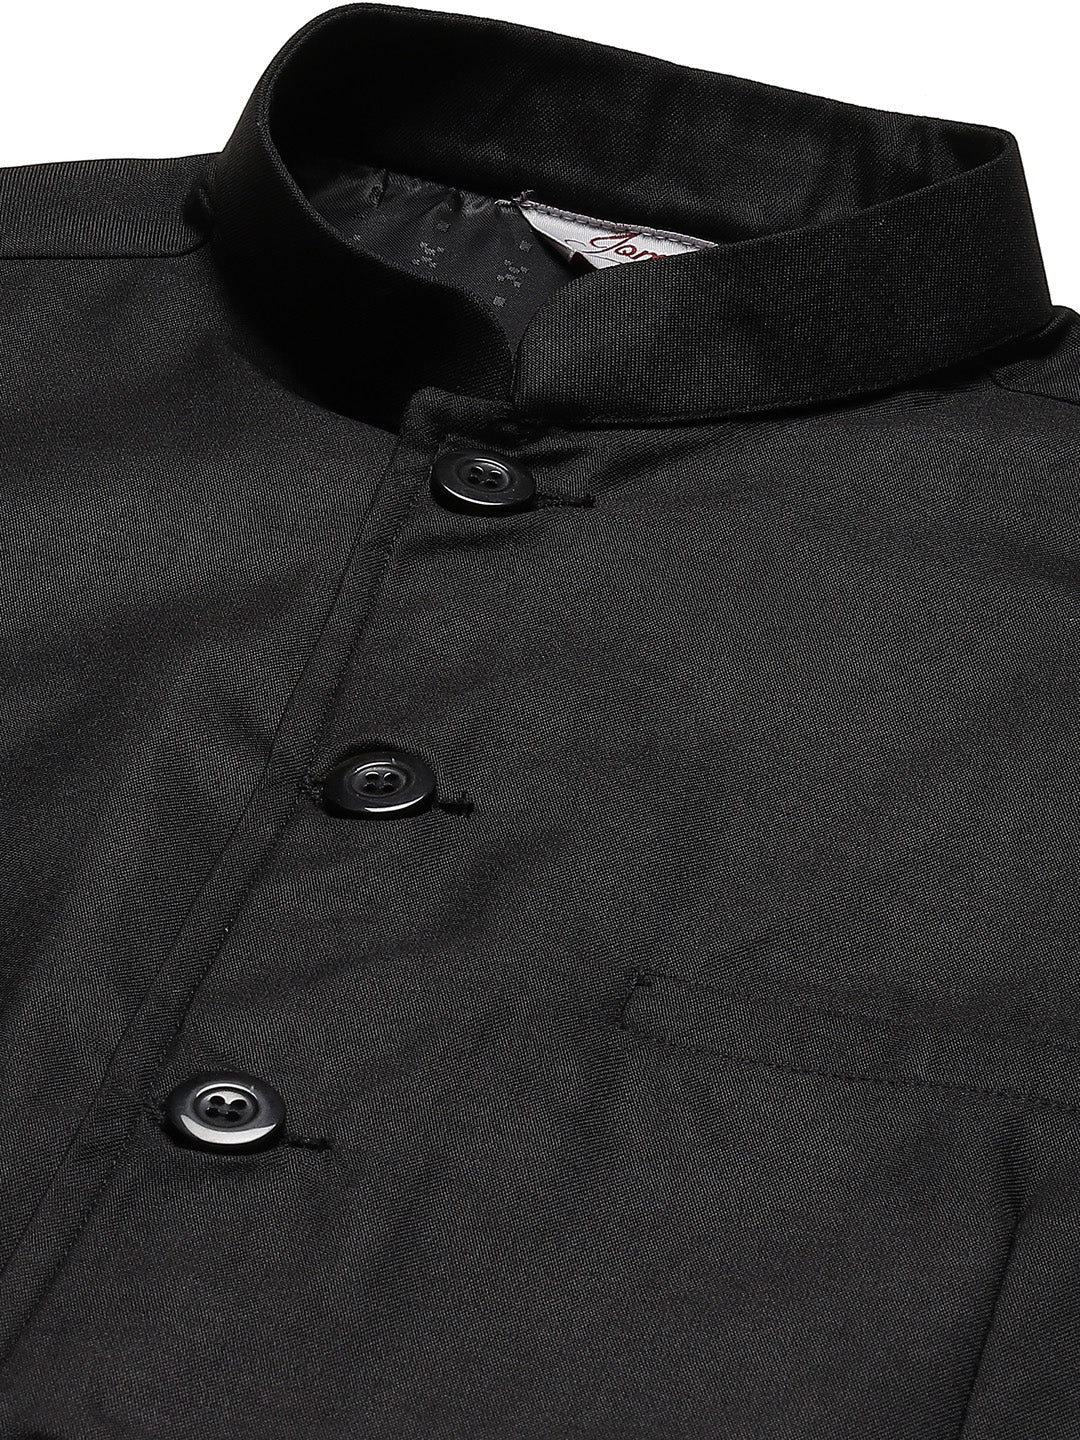 Jompers Men's Beautiful Black Solid Nehru Jacket